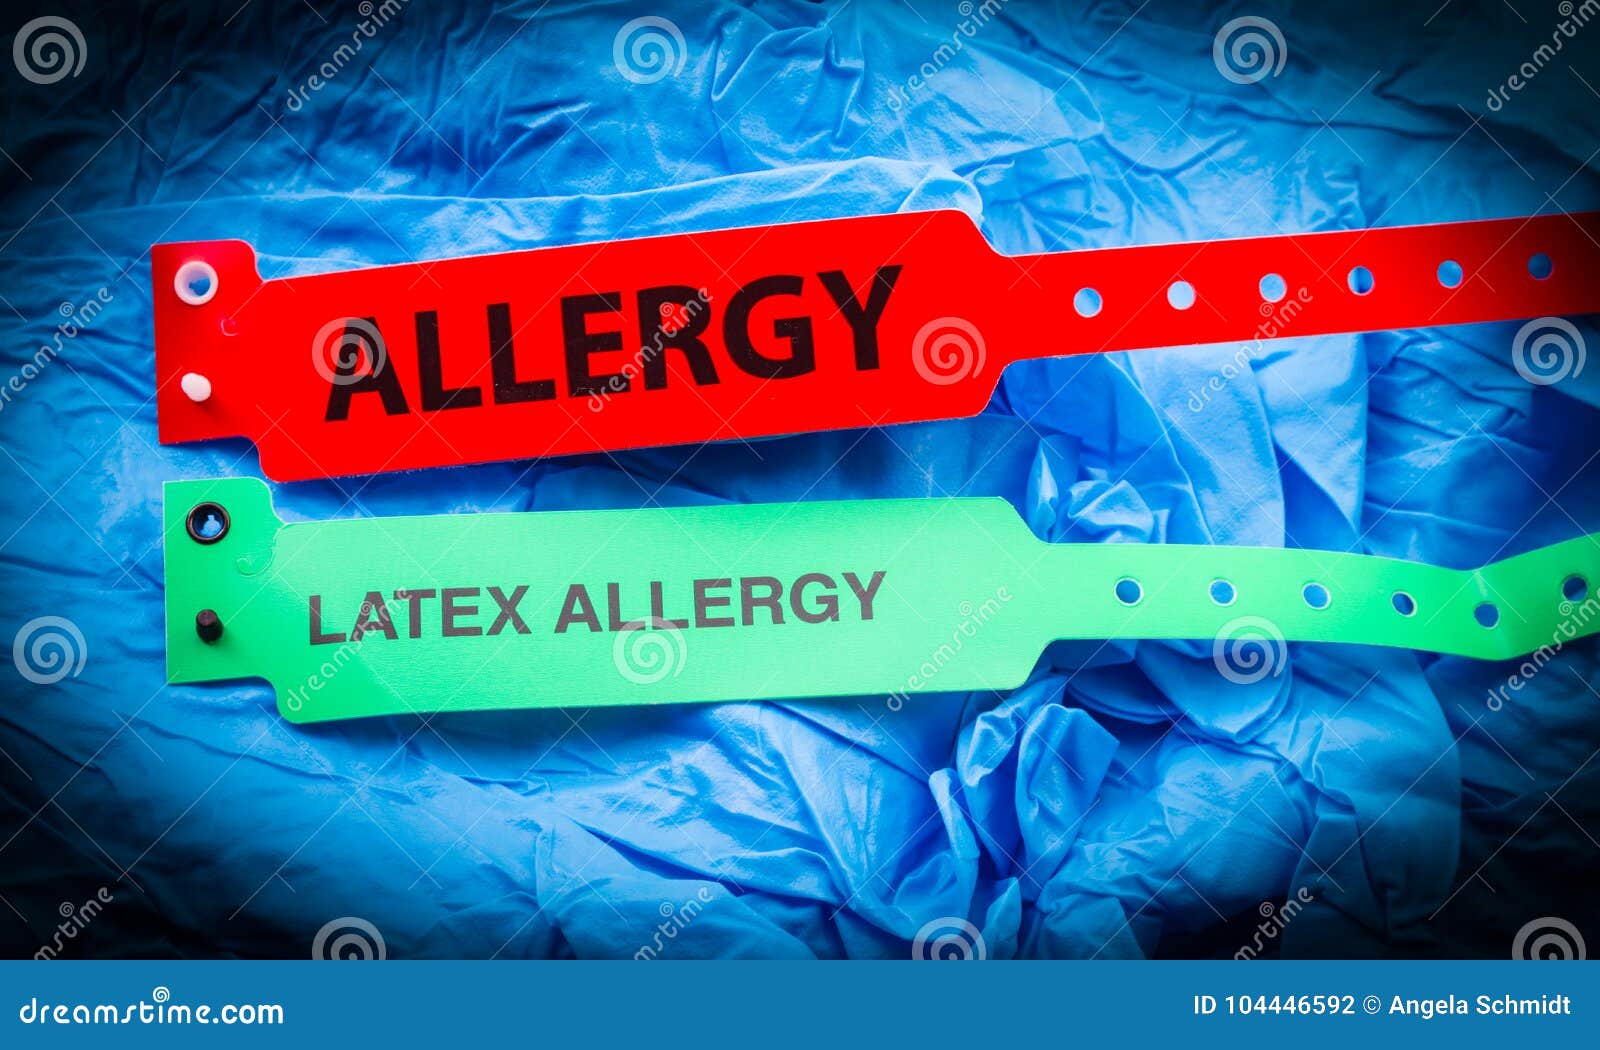 Allergy Bracelets for Medical Needs | ROAD iD